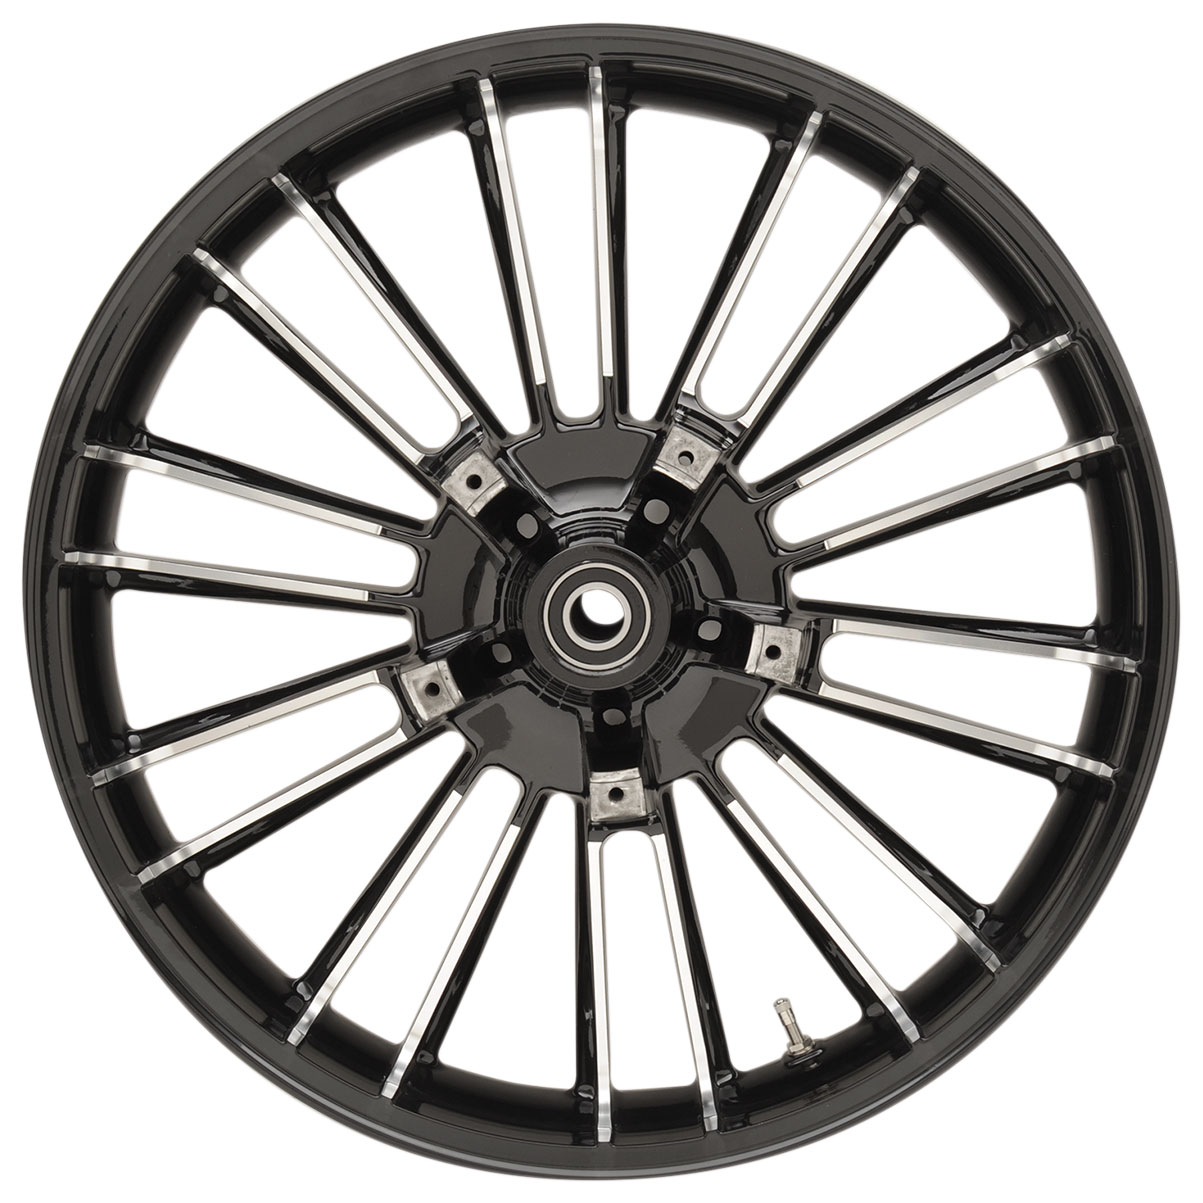 Coastal Moto Atlantic Black Front Wheel, 21" x 3.5" ABS